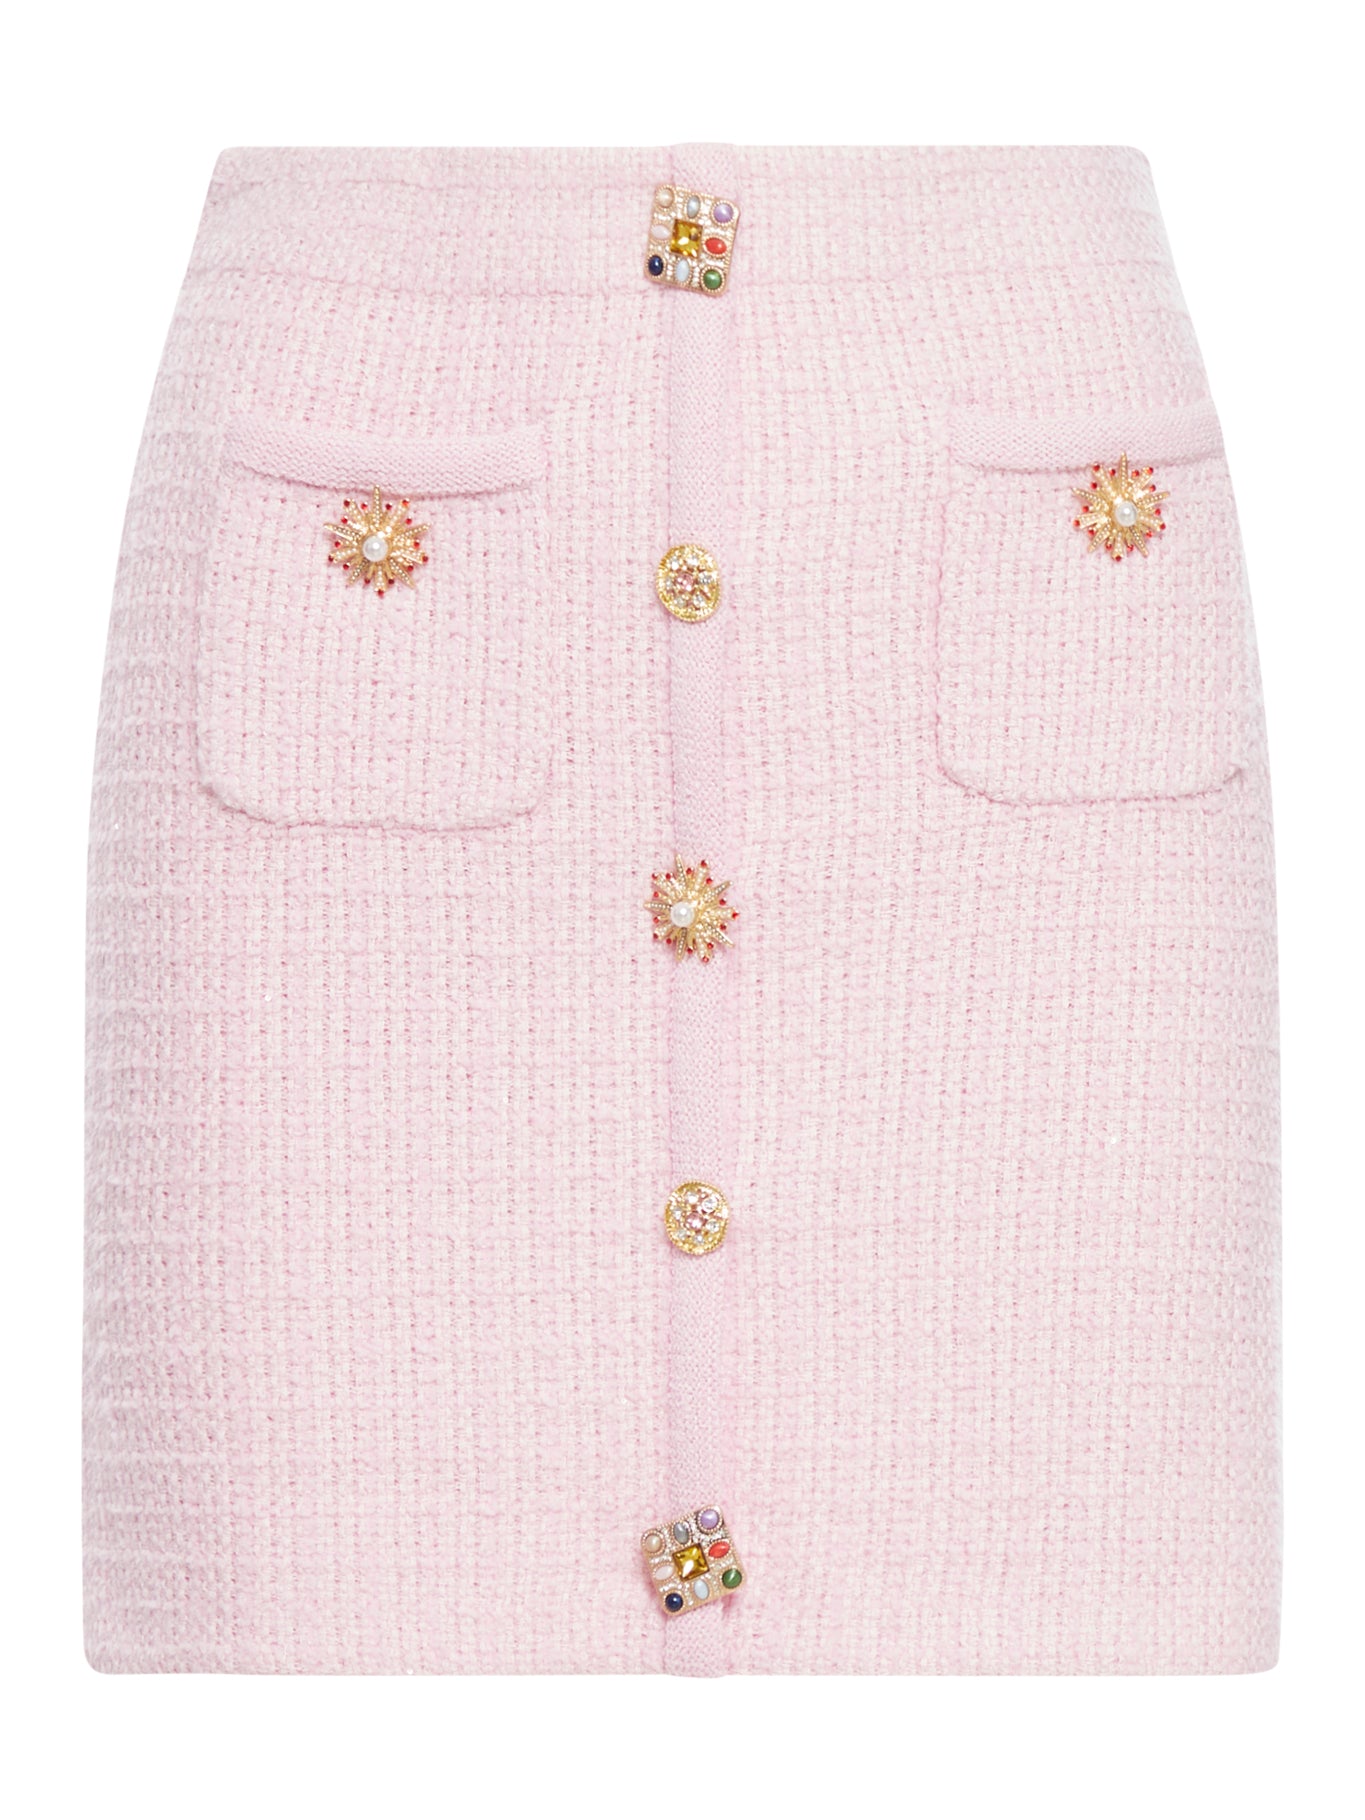 Miniskirt with jewel buttons